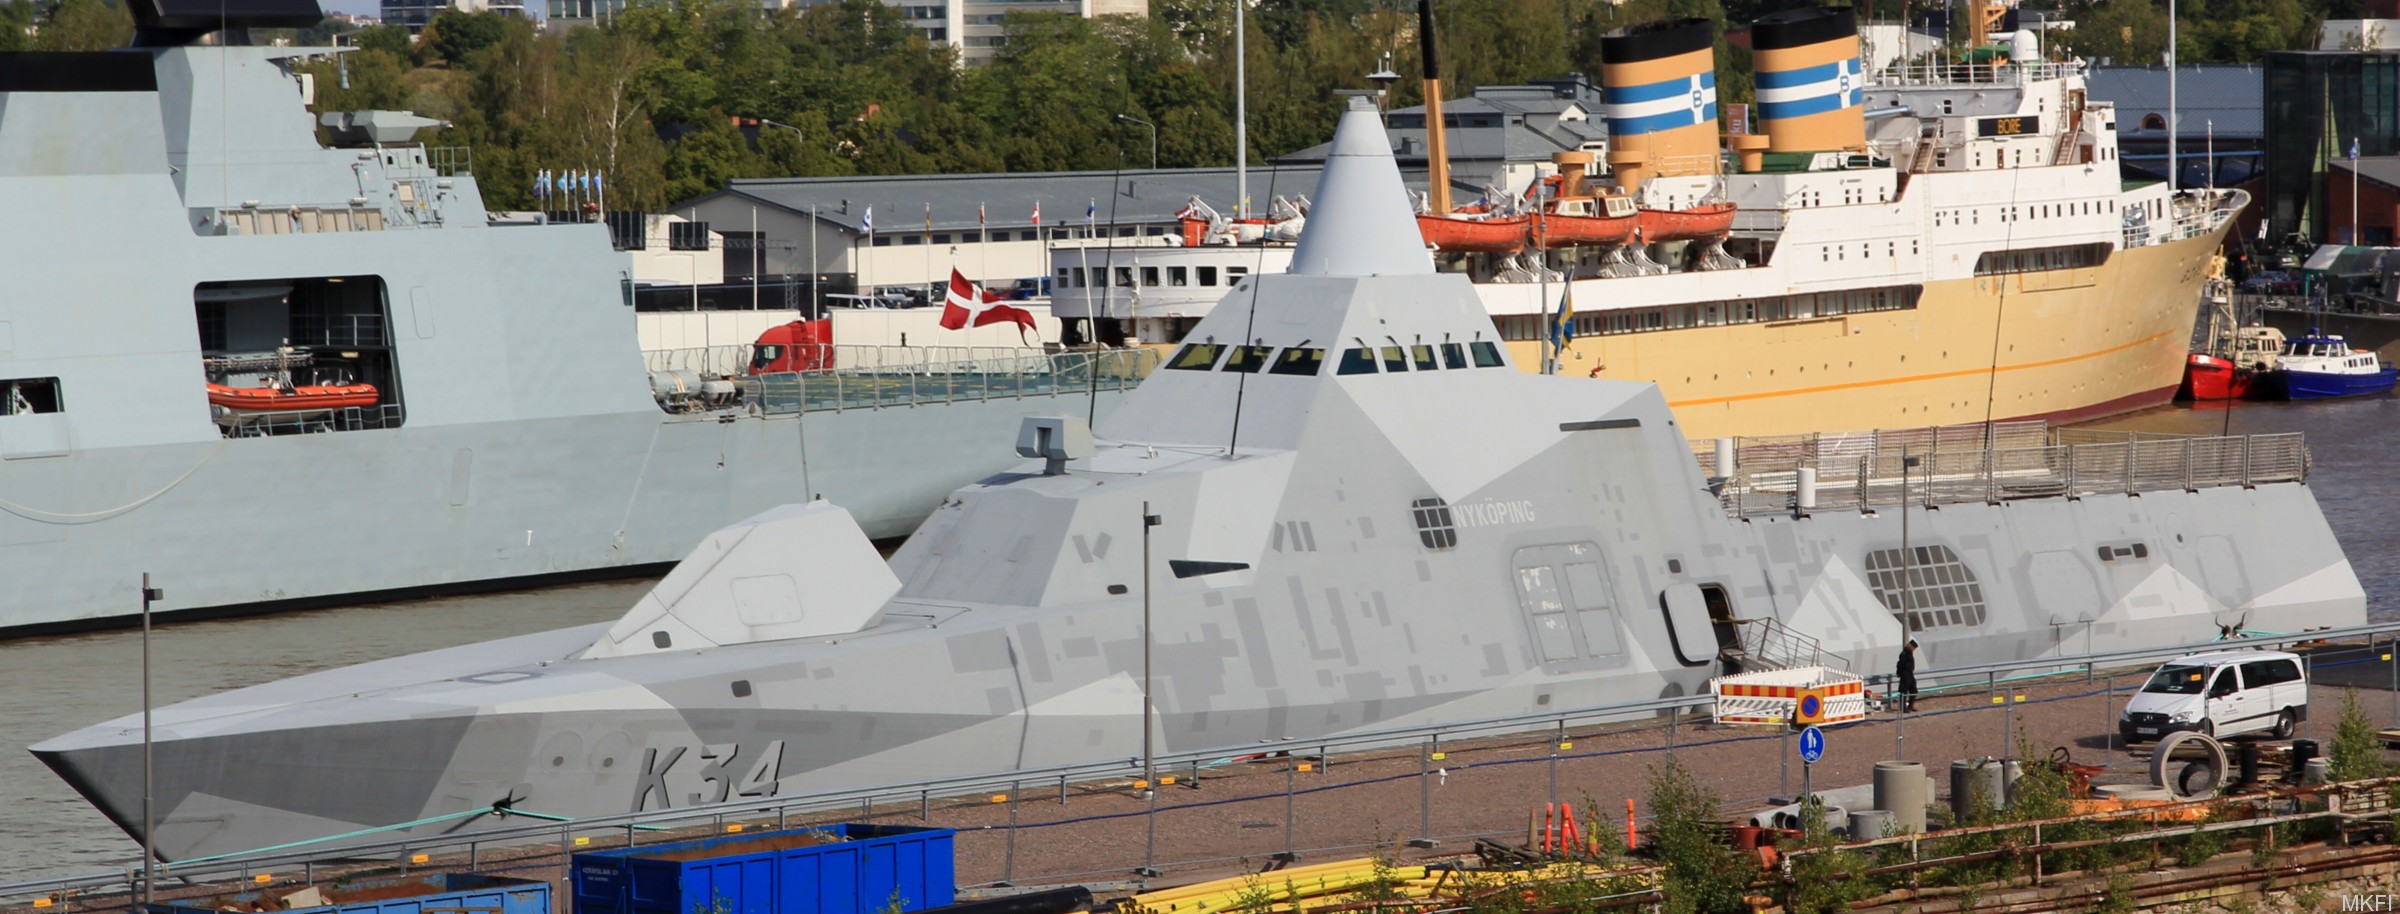 k34 hswms hms nykoping visby class corvette royal swedish navy svenska marinen 13